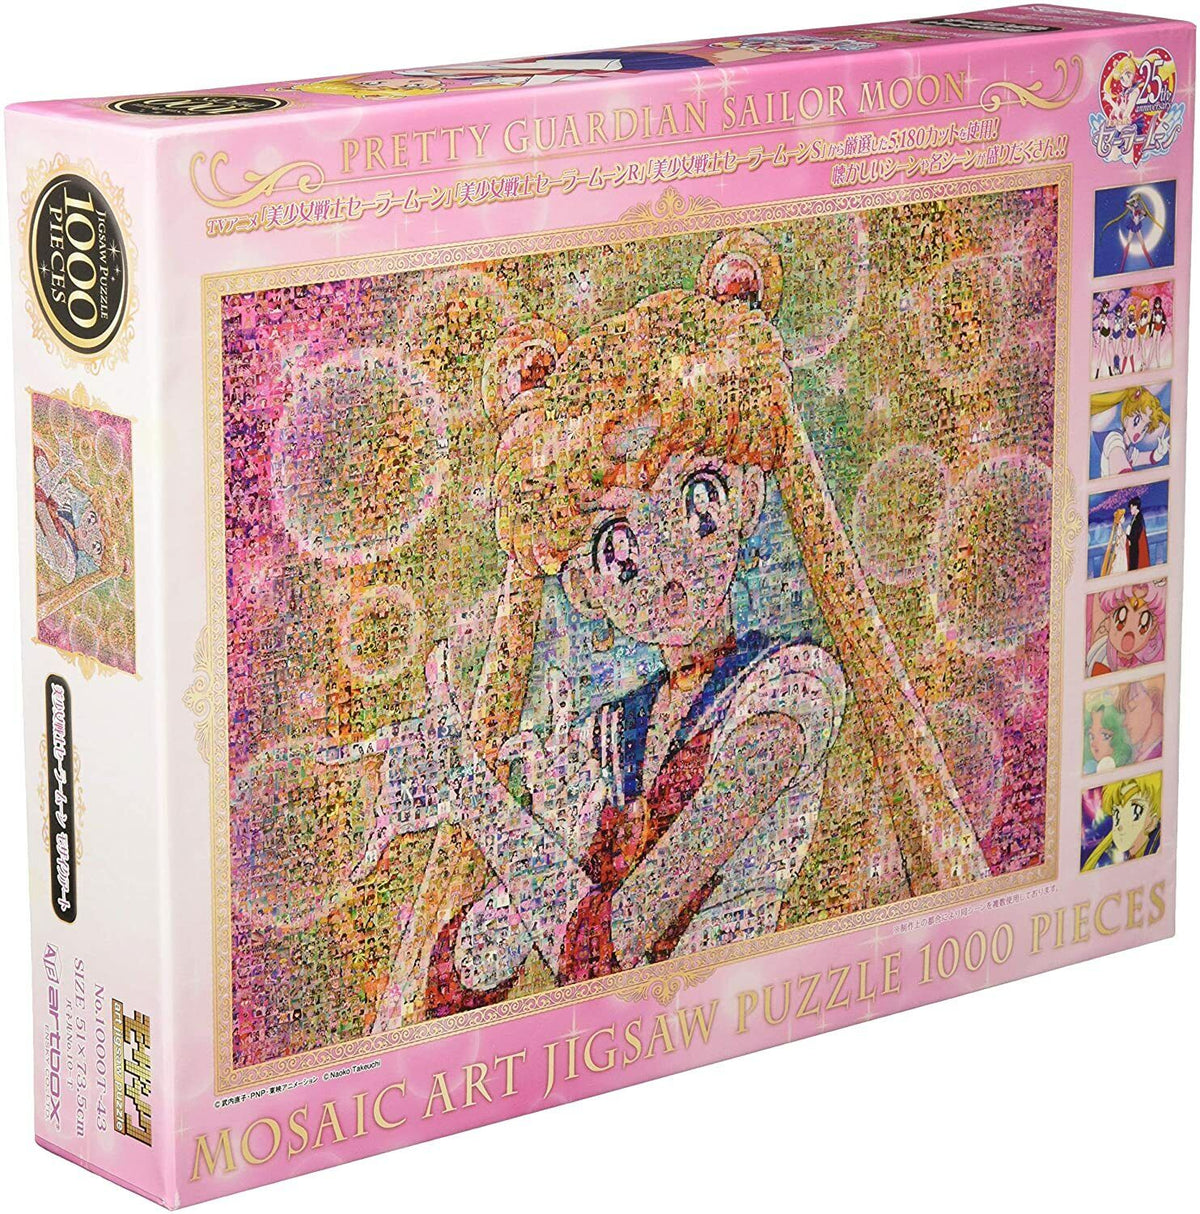 Sailor Moon Mosaic Art Puzzle 1000